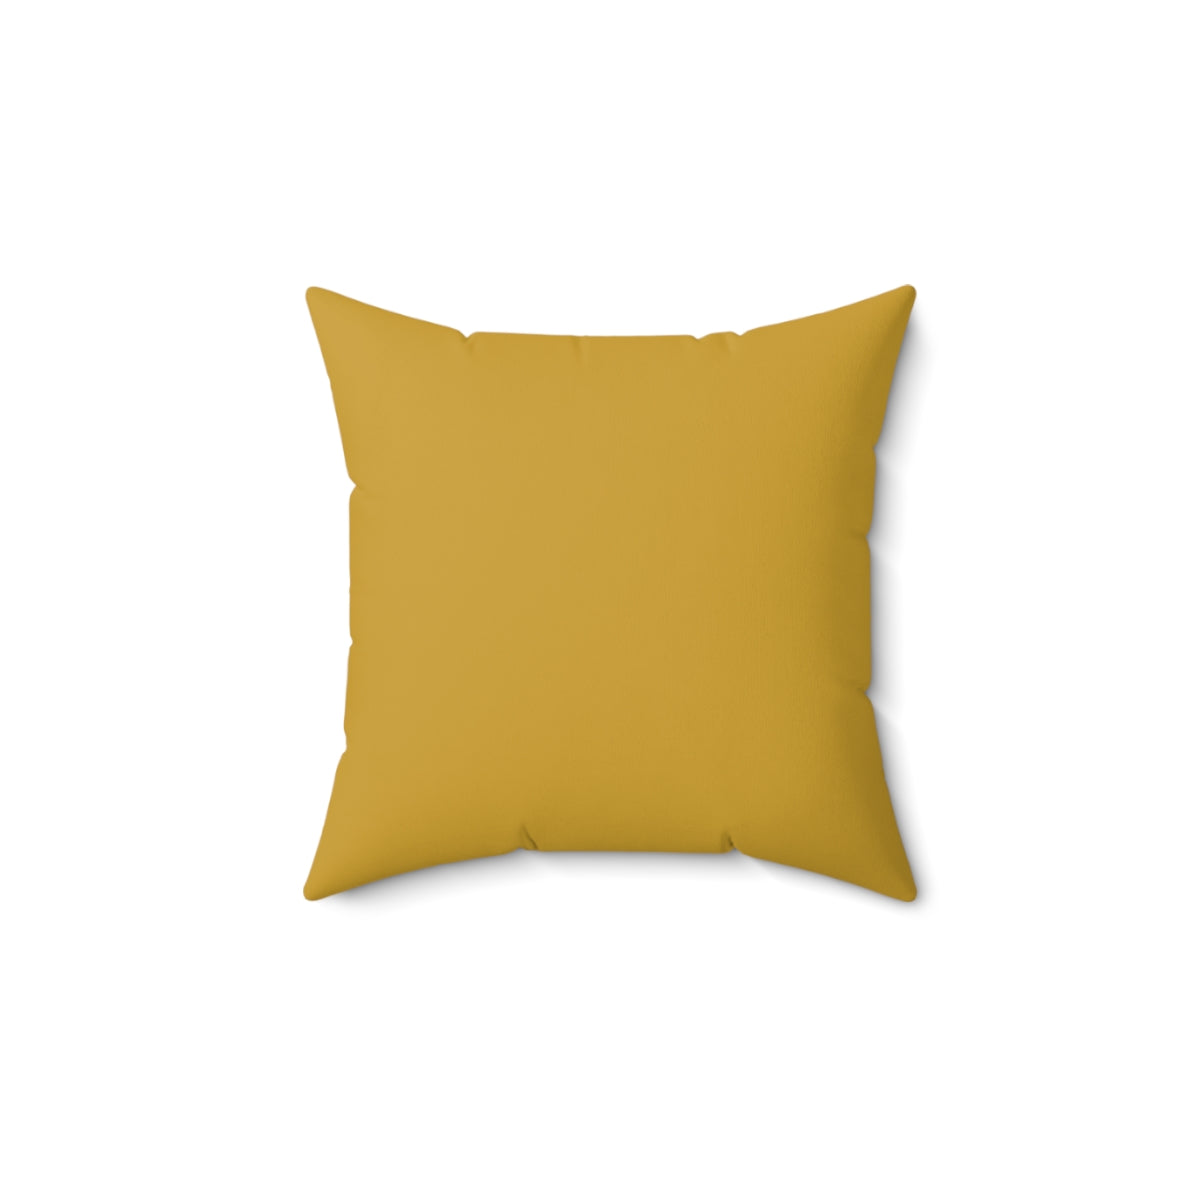 Burgundy Affirmative “Money” Square Pillow